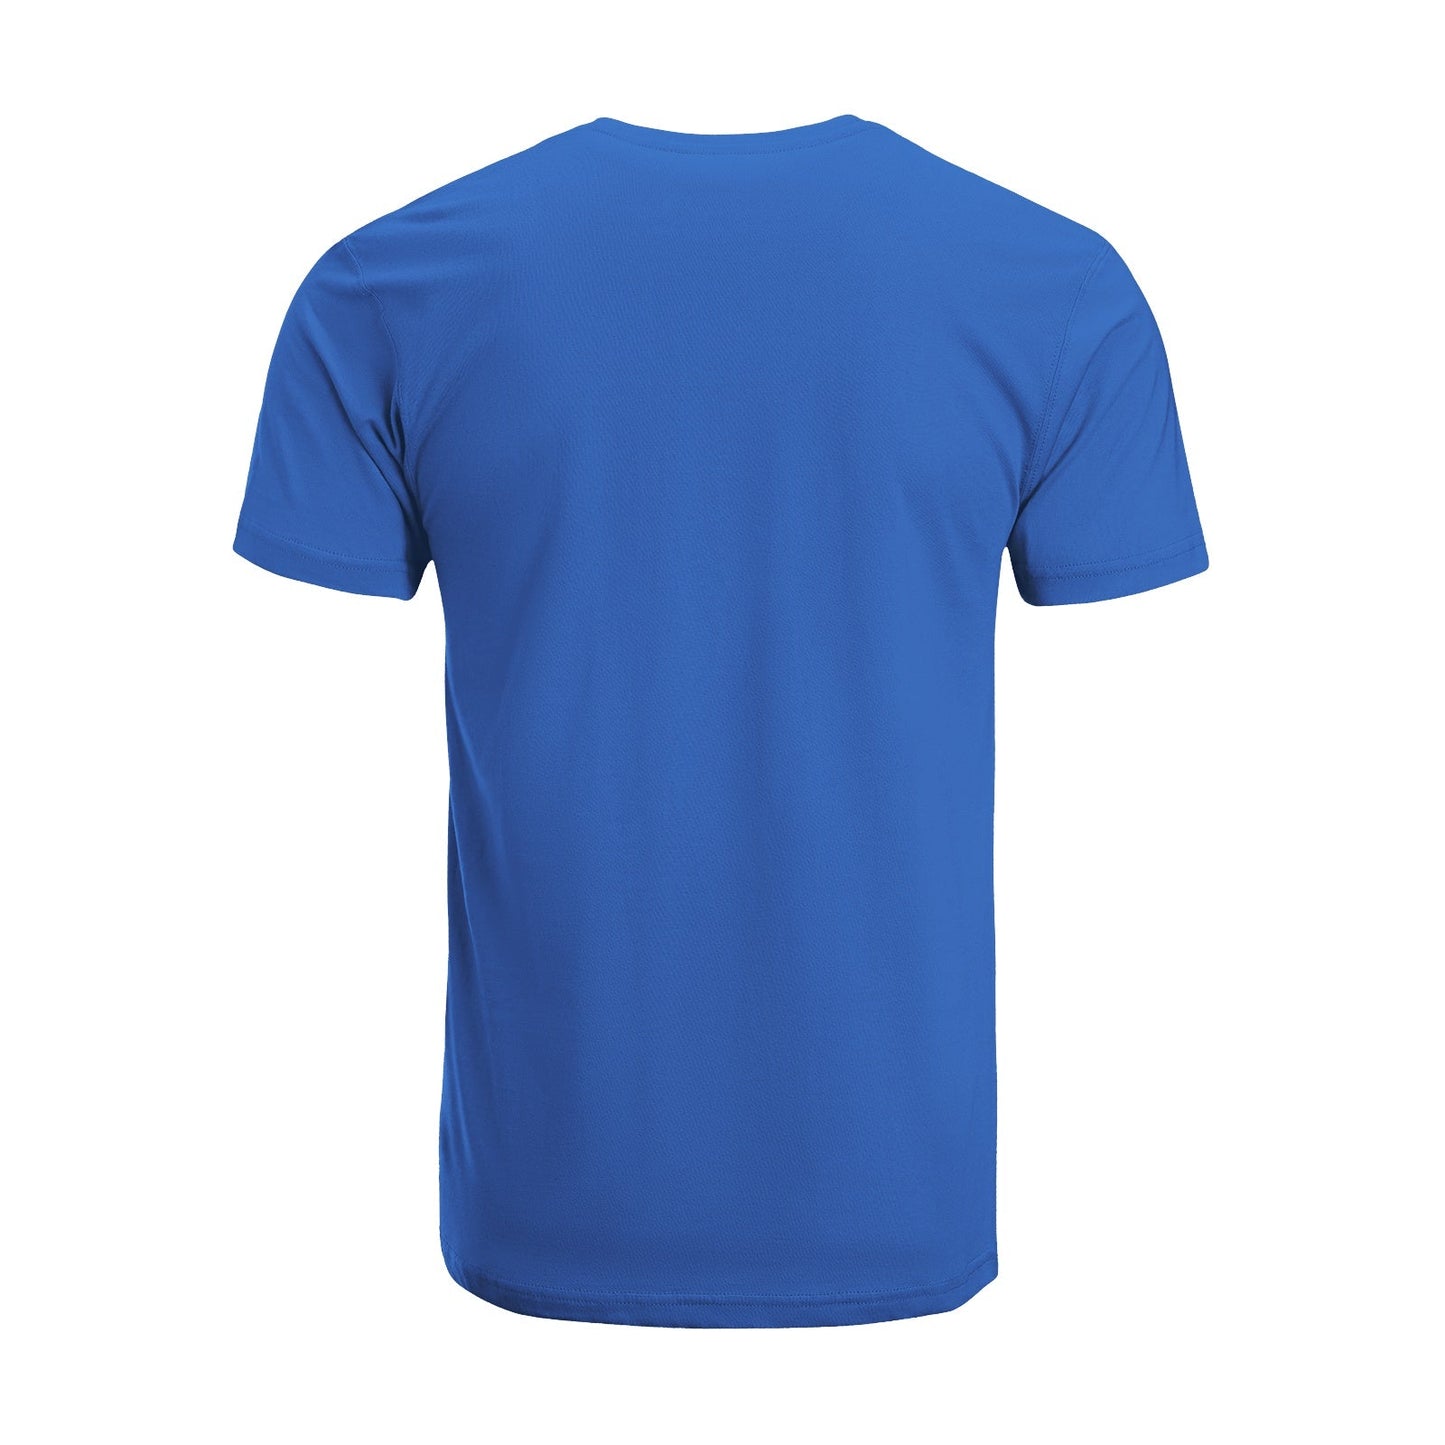 Unisex Short Sleeve Crew Neck Cotton Jersey T-Shirt Gym No. 47 - Tara-Outfits.com